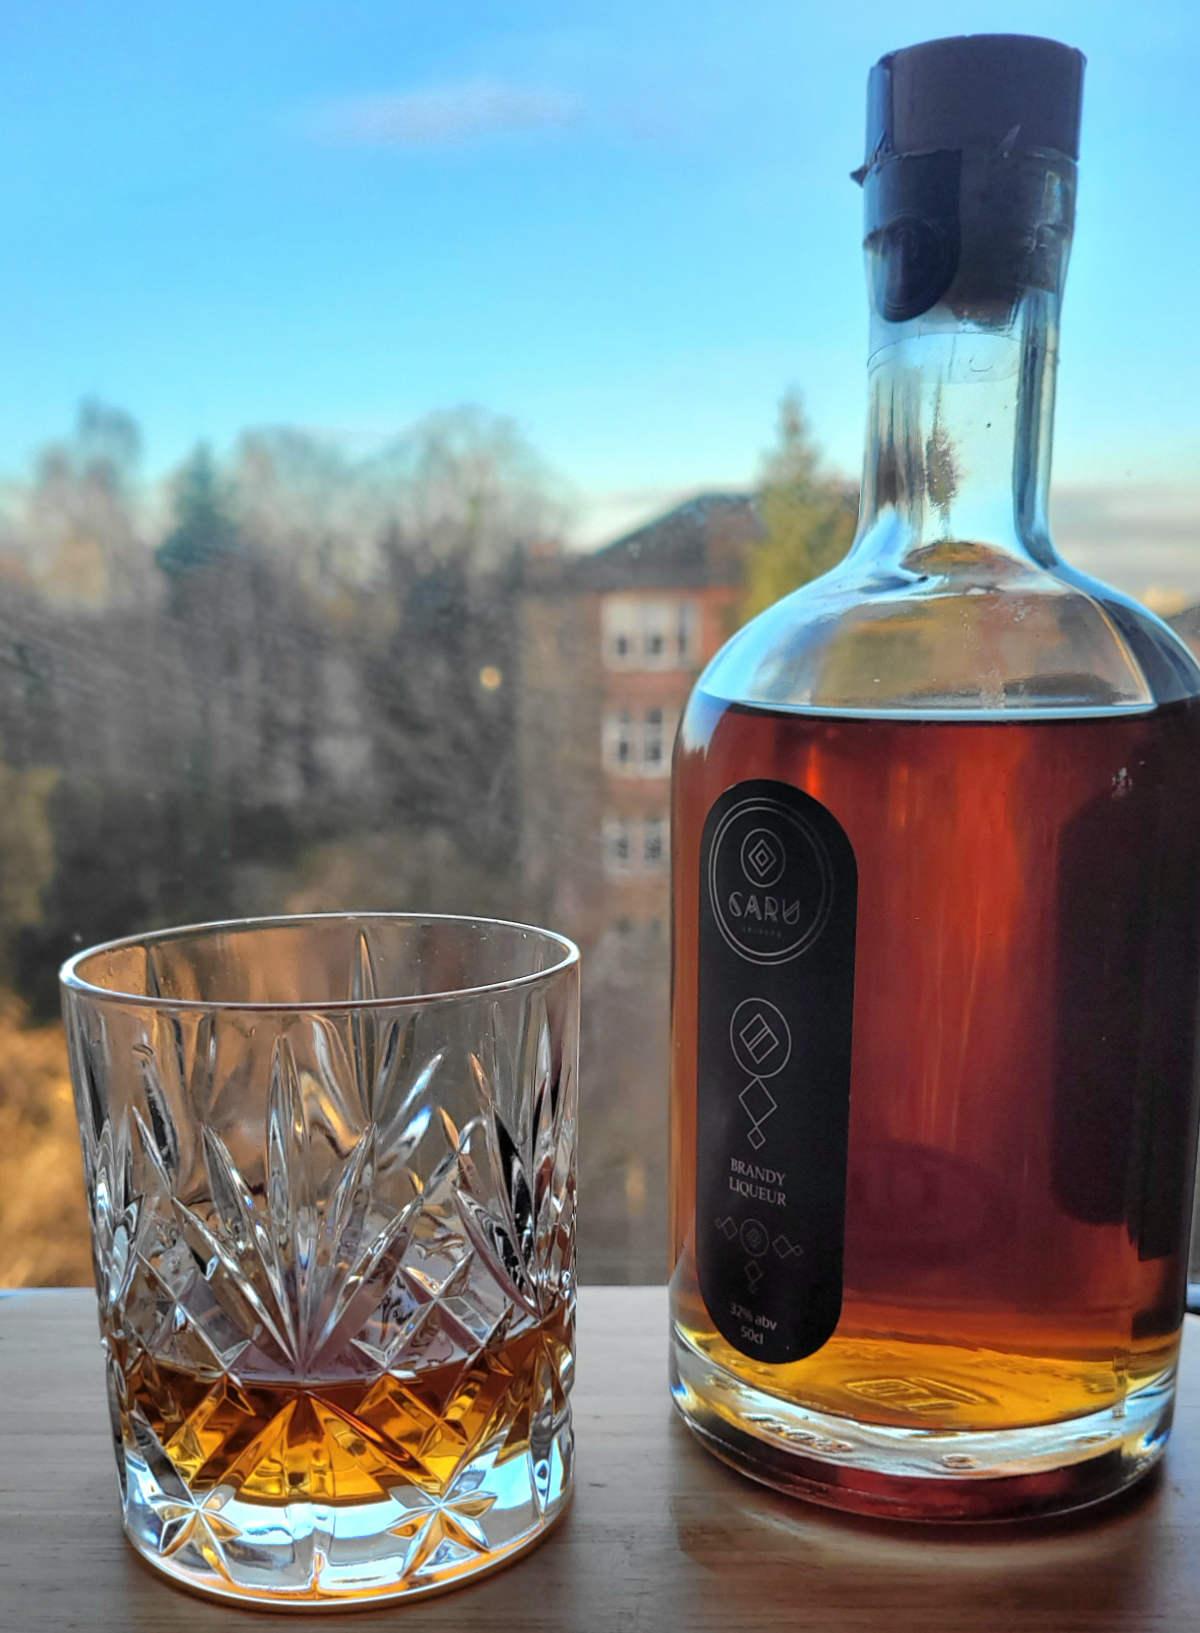 caru brandy bottle and glass